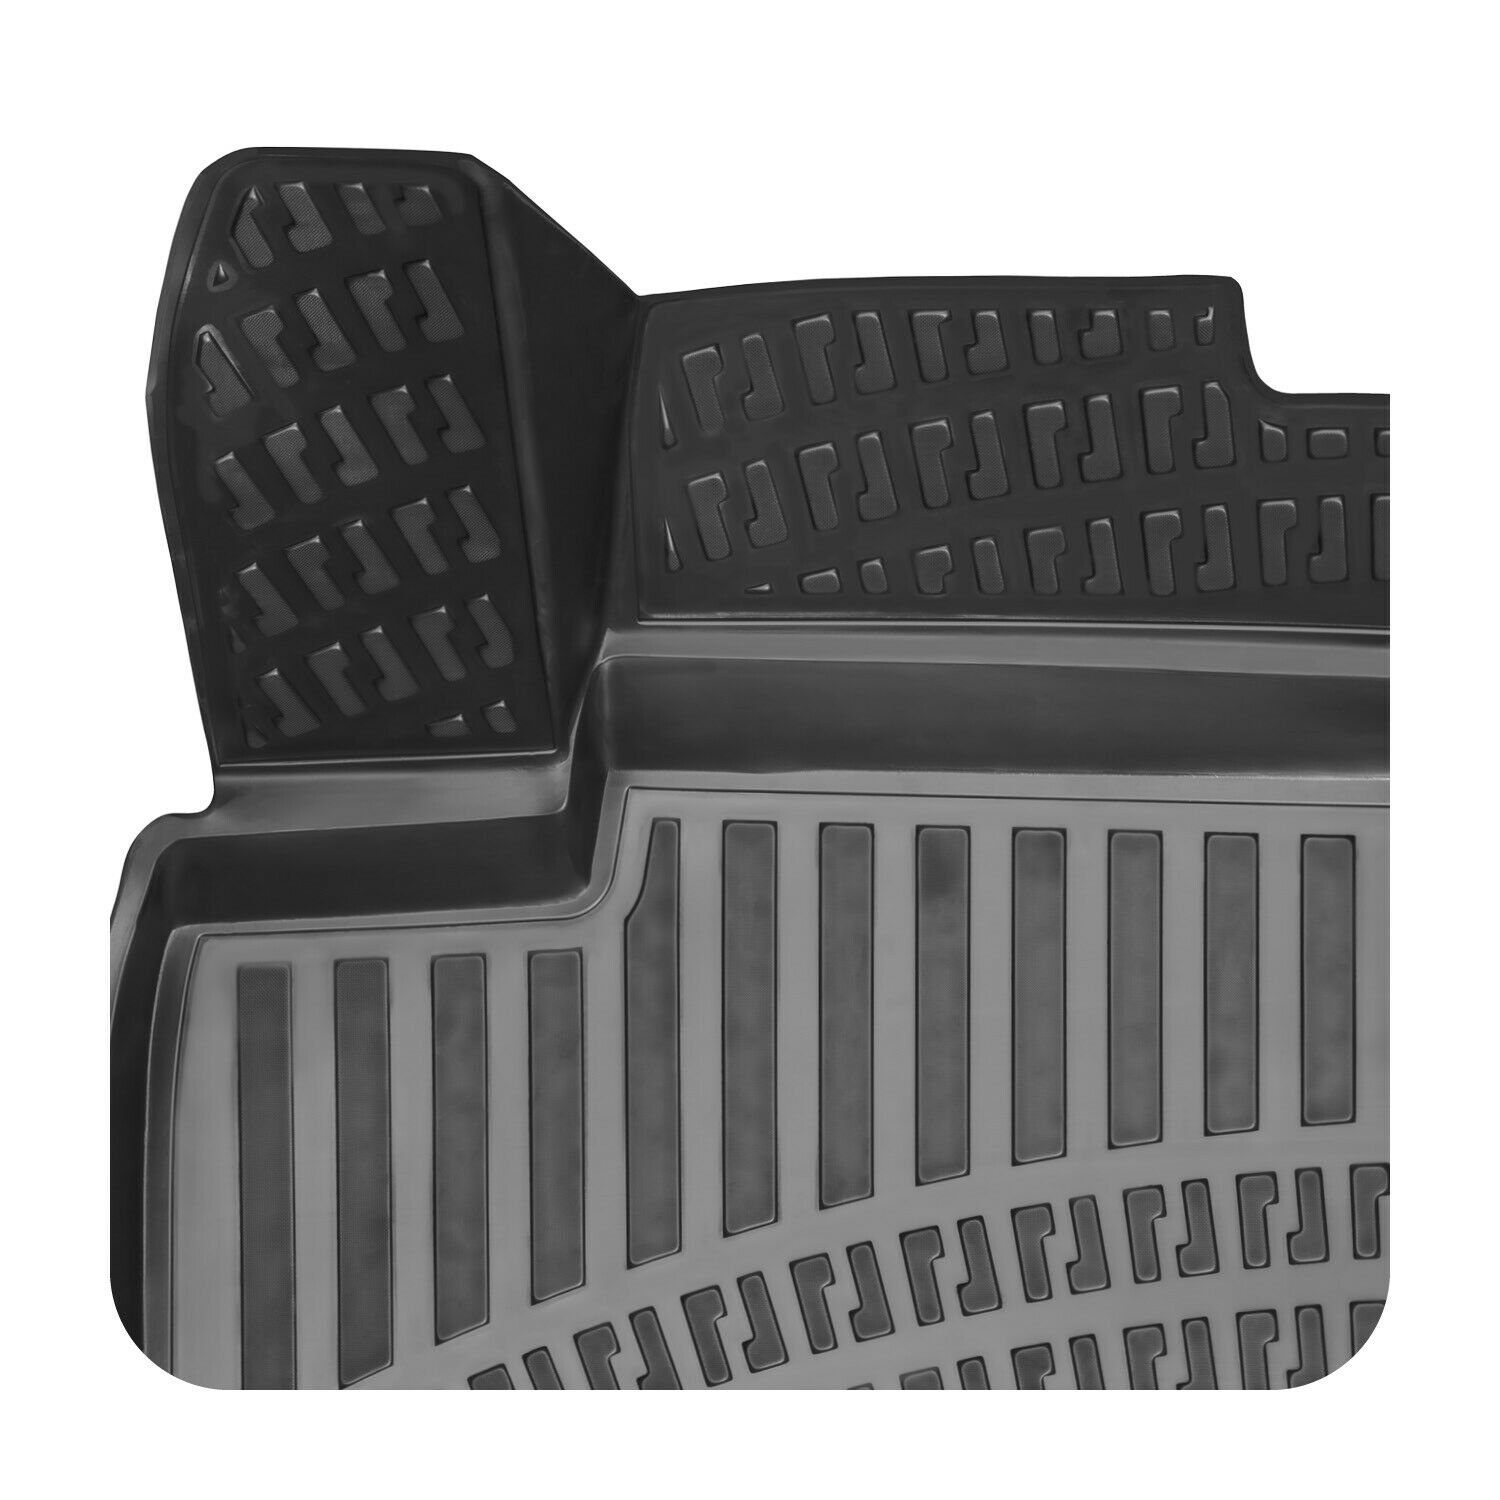 Trimak Auto-Fußmatte, Trimak Gummimatten TESLA Model 3 Autofußmatten